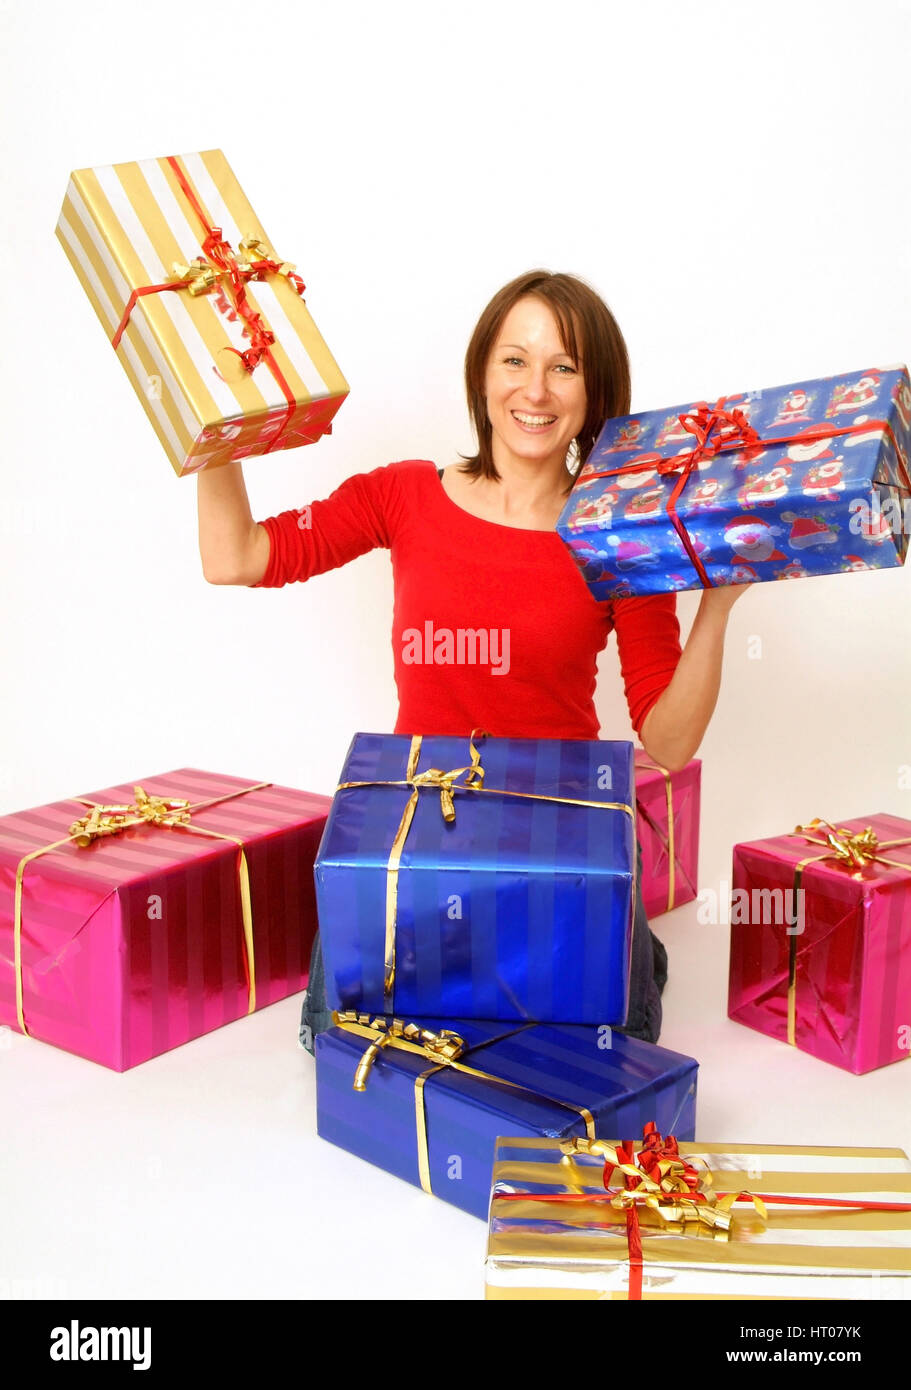 Frau mit Weihnachtsgeschenken - woman with christmas presents Banque D'Images